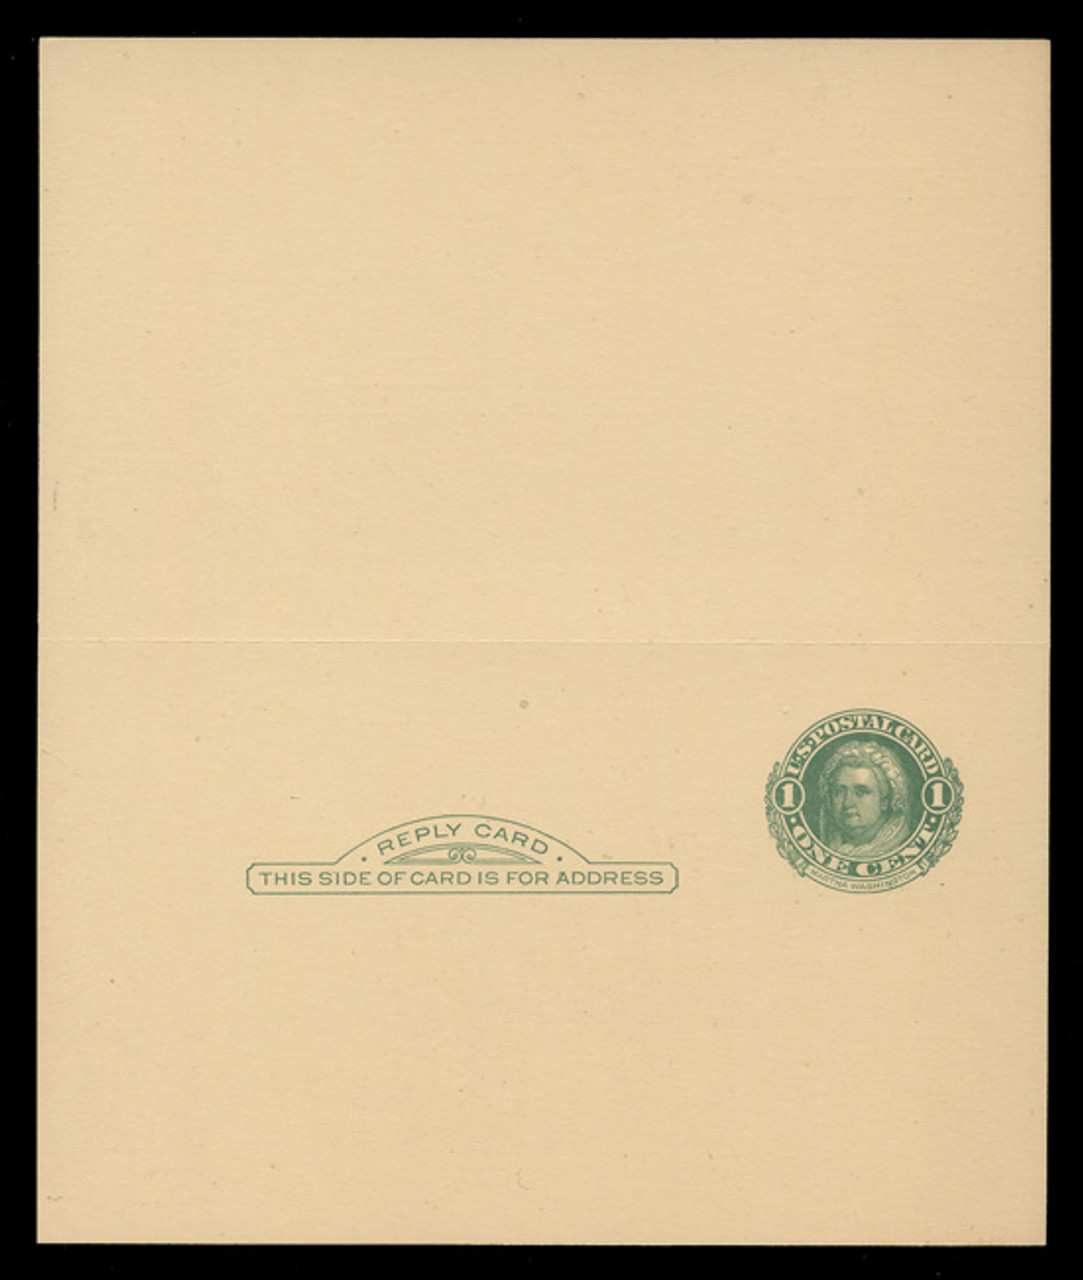 USA Scott # UY 14b/UPSS #MR23-3, 1952 2c on 1c Washington (Green) - Mint Message-Reply Card - UNFOLDED (See Warranty)